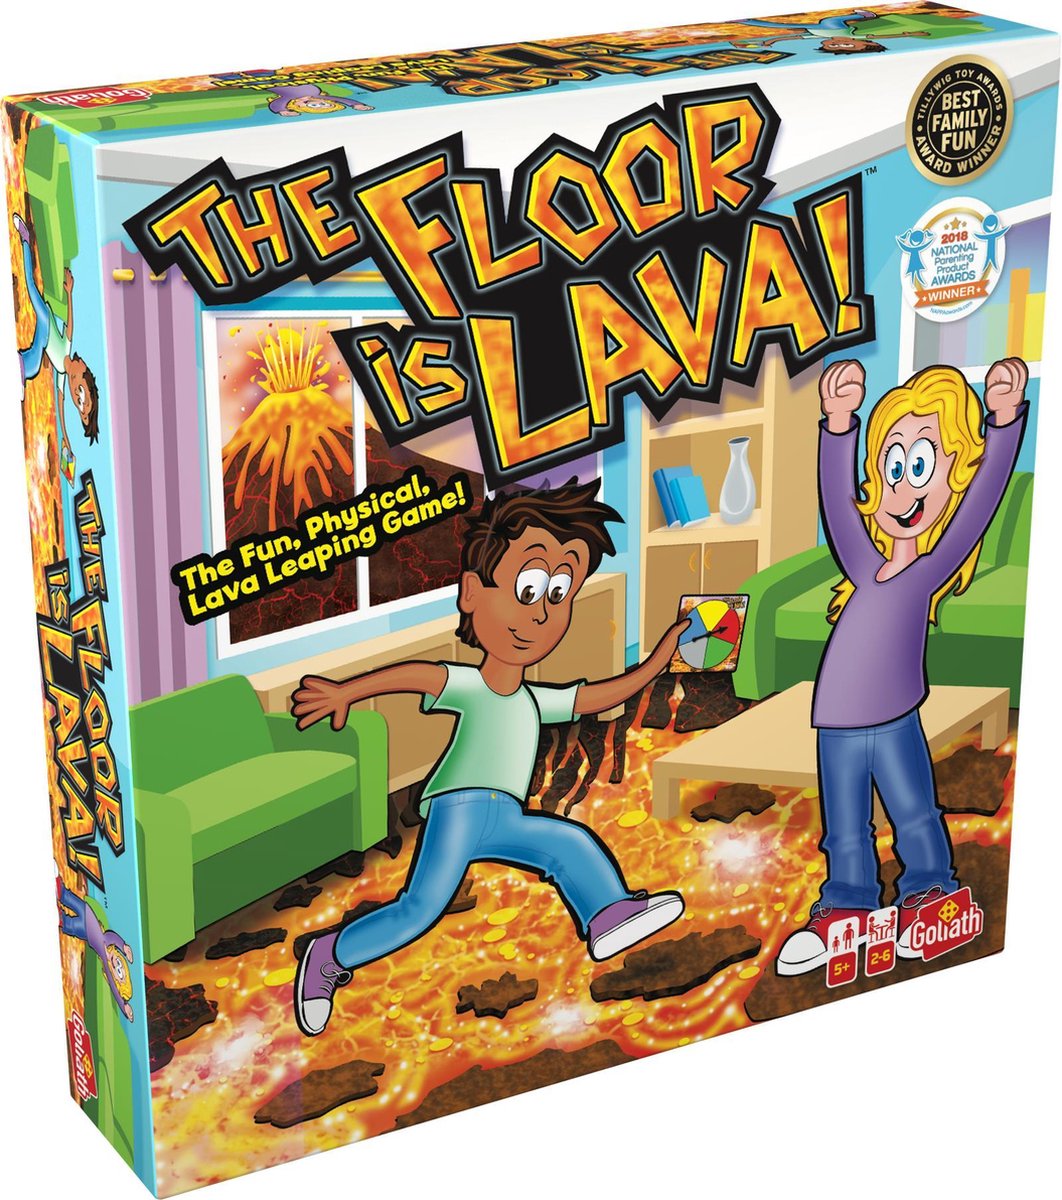 De Vloer Is Lava - Kinderspel